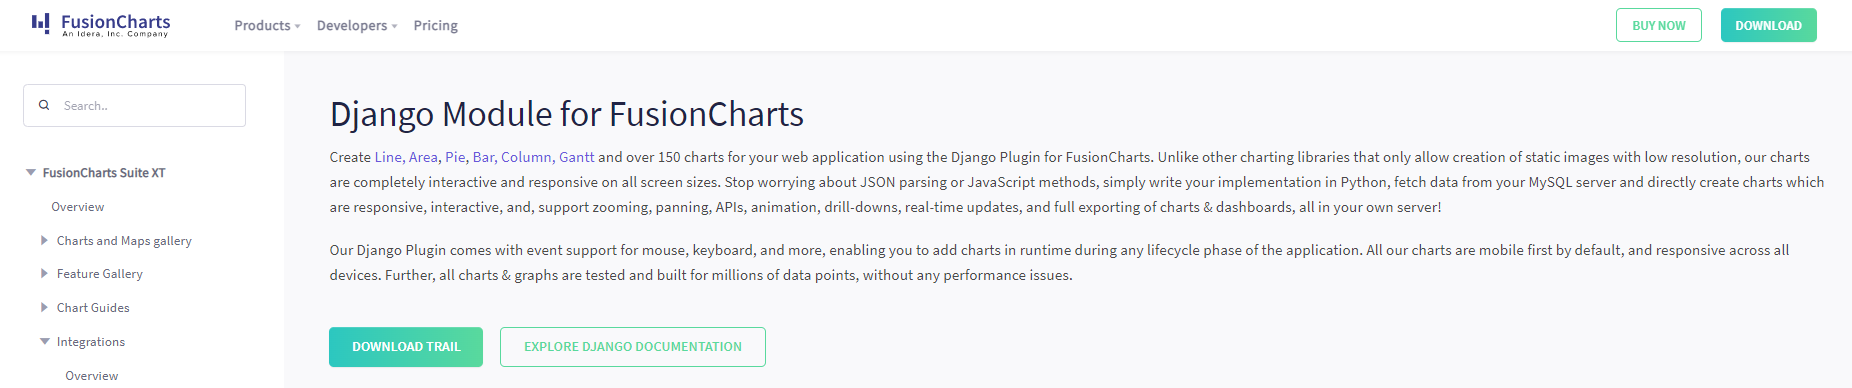 Visualize Your Data Using FusionCharts - Django Module for FusionCharts